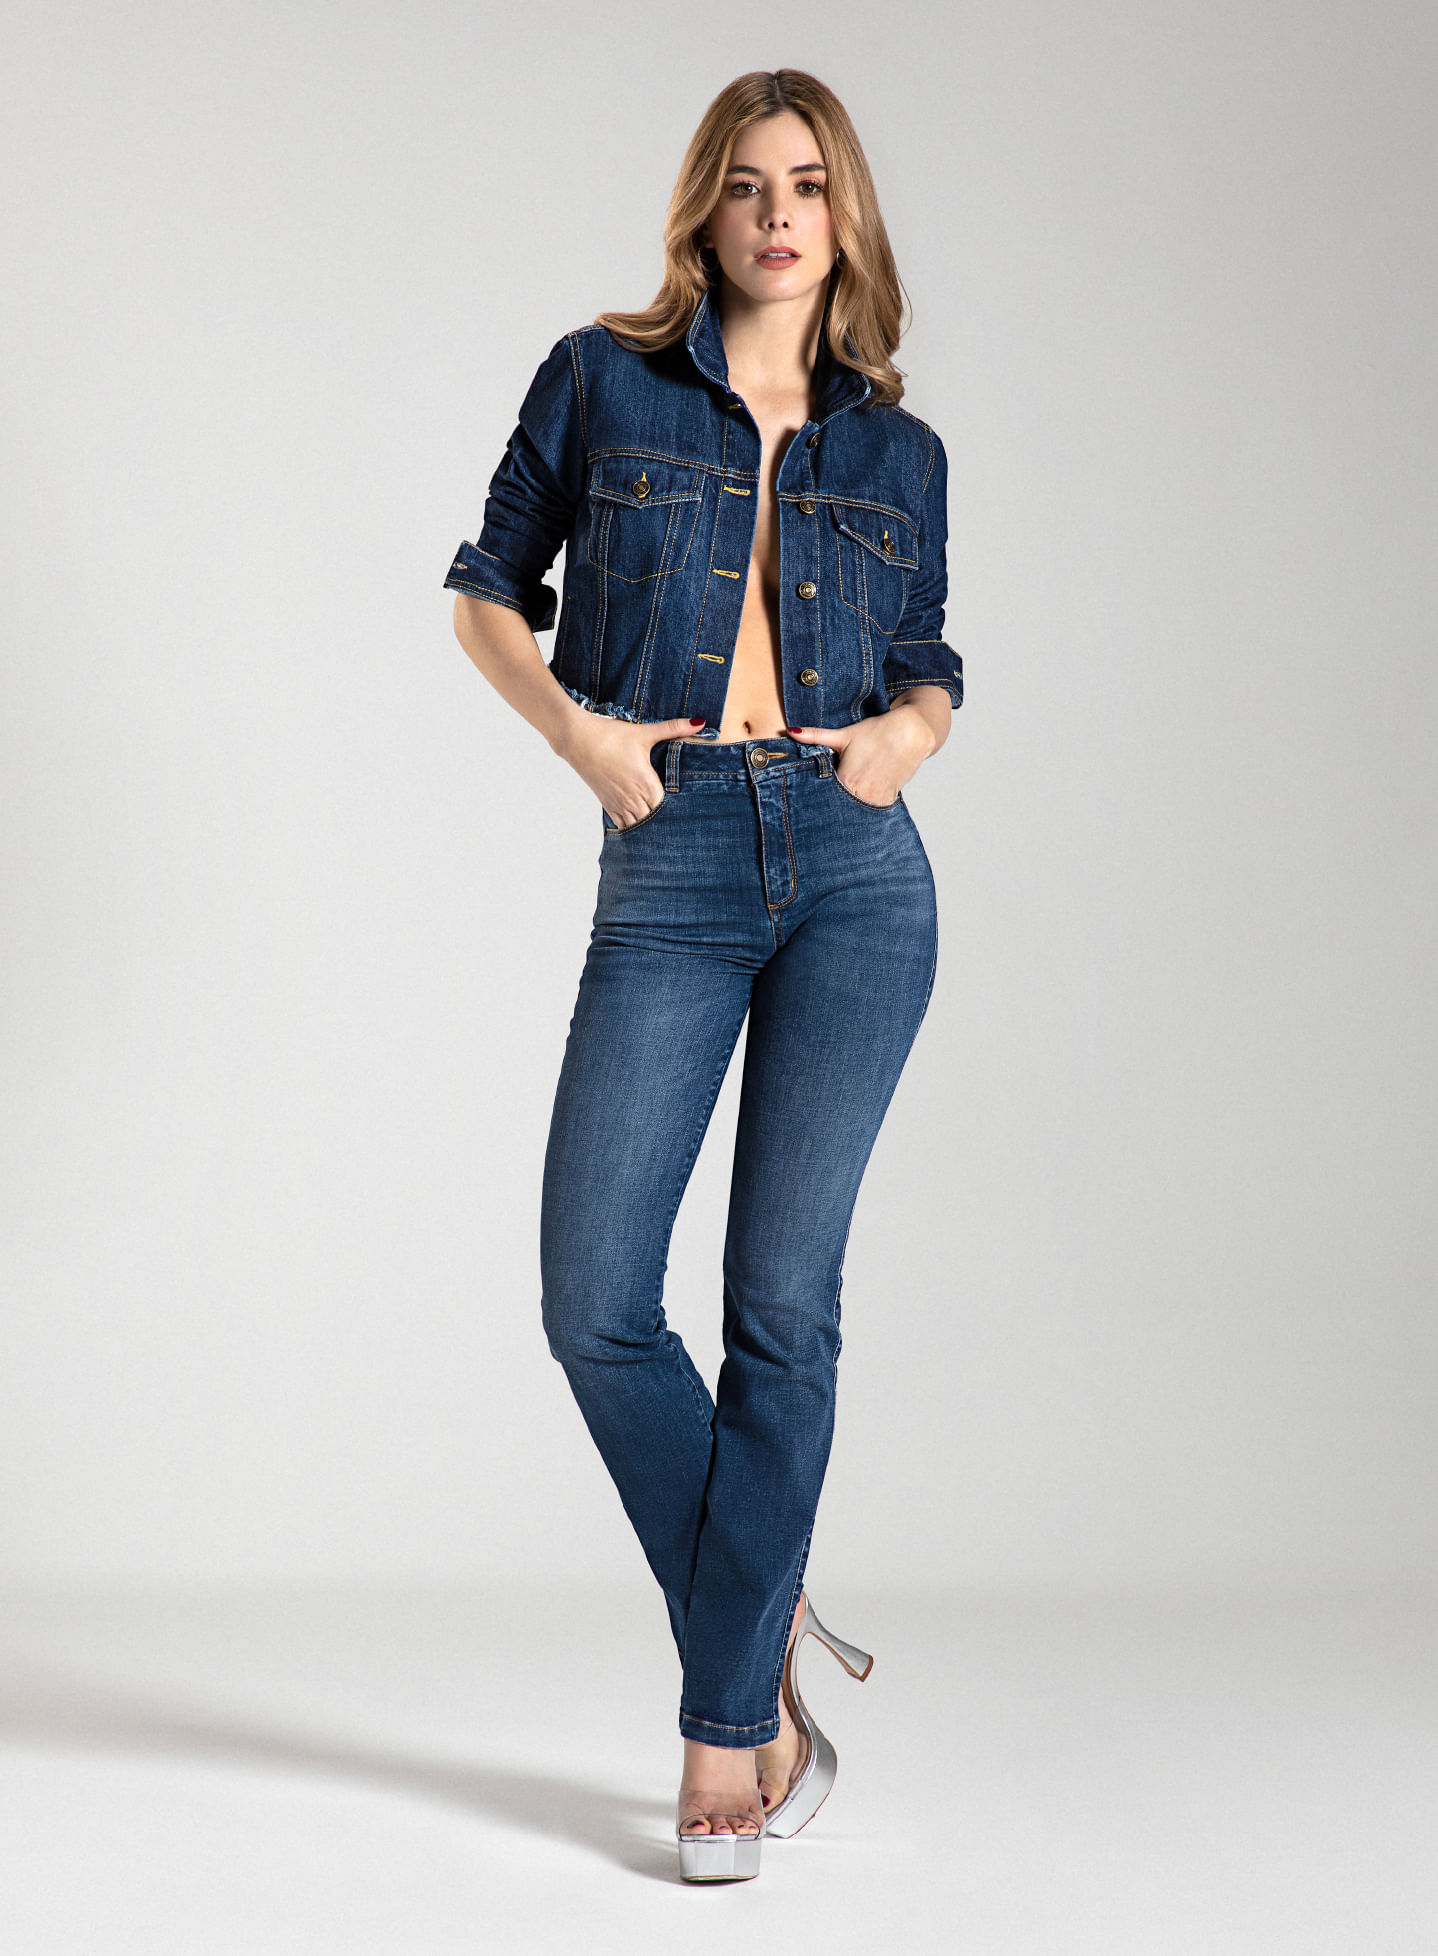 Mujer usando jean bota recta, pretina angosta y tiro alto, chaqueta de jean de la marca Studio F